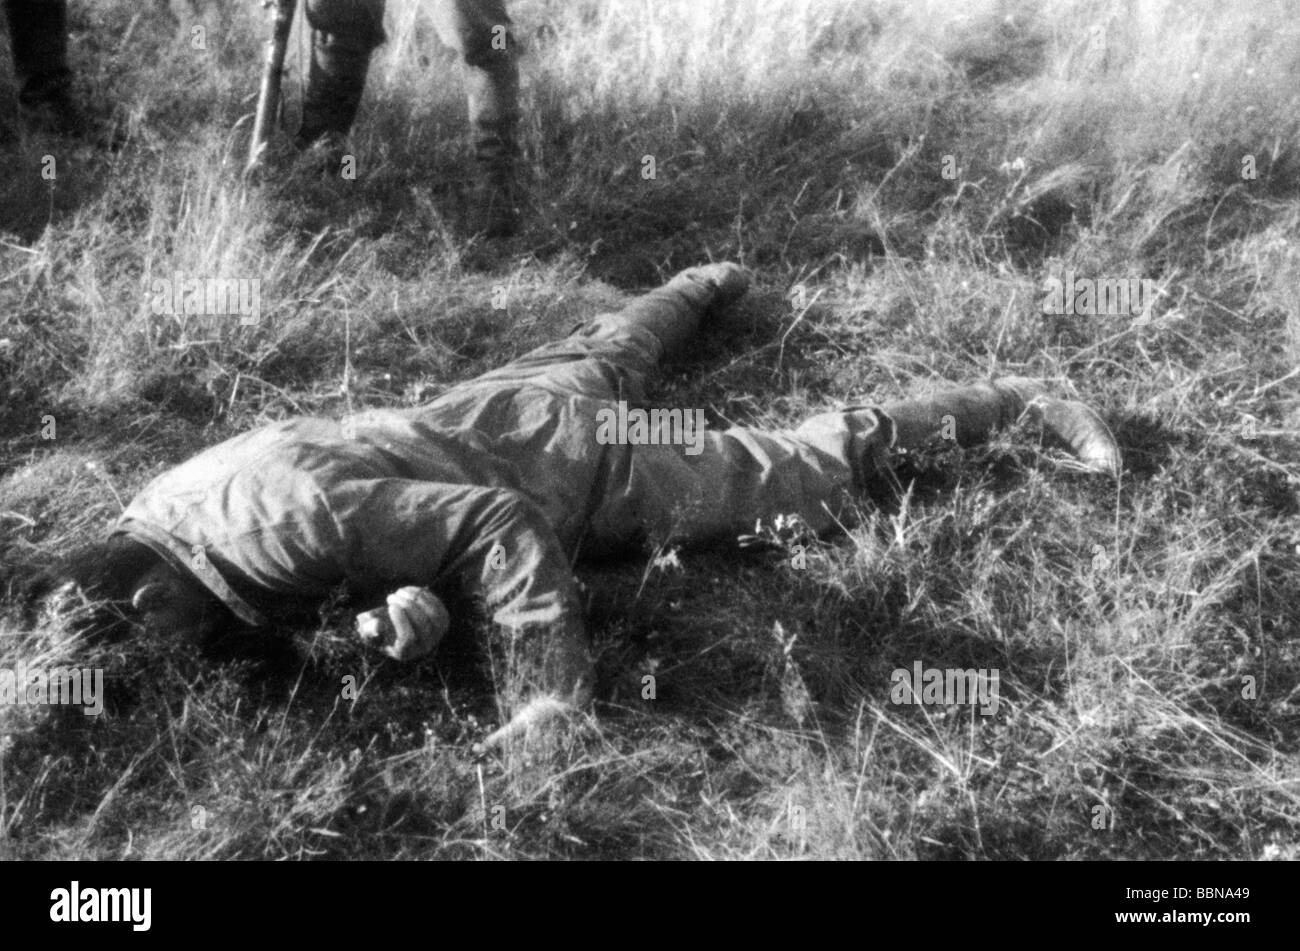 events, Second World War / WWII, Russia, fallen soldiers / dead bodies, fallen Soviet airman, Dukhovshchina near Smolensk, Russia, 26.7.1941, Stock Photo